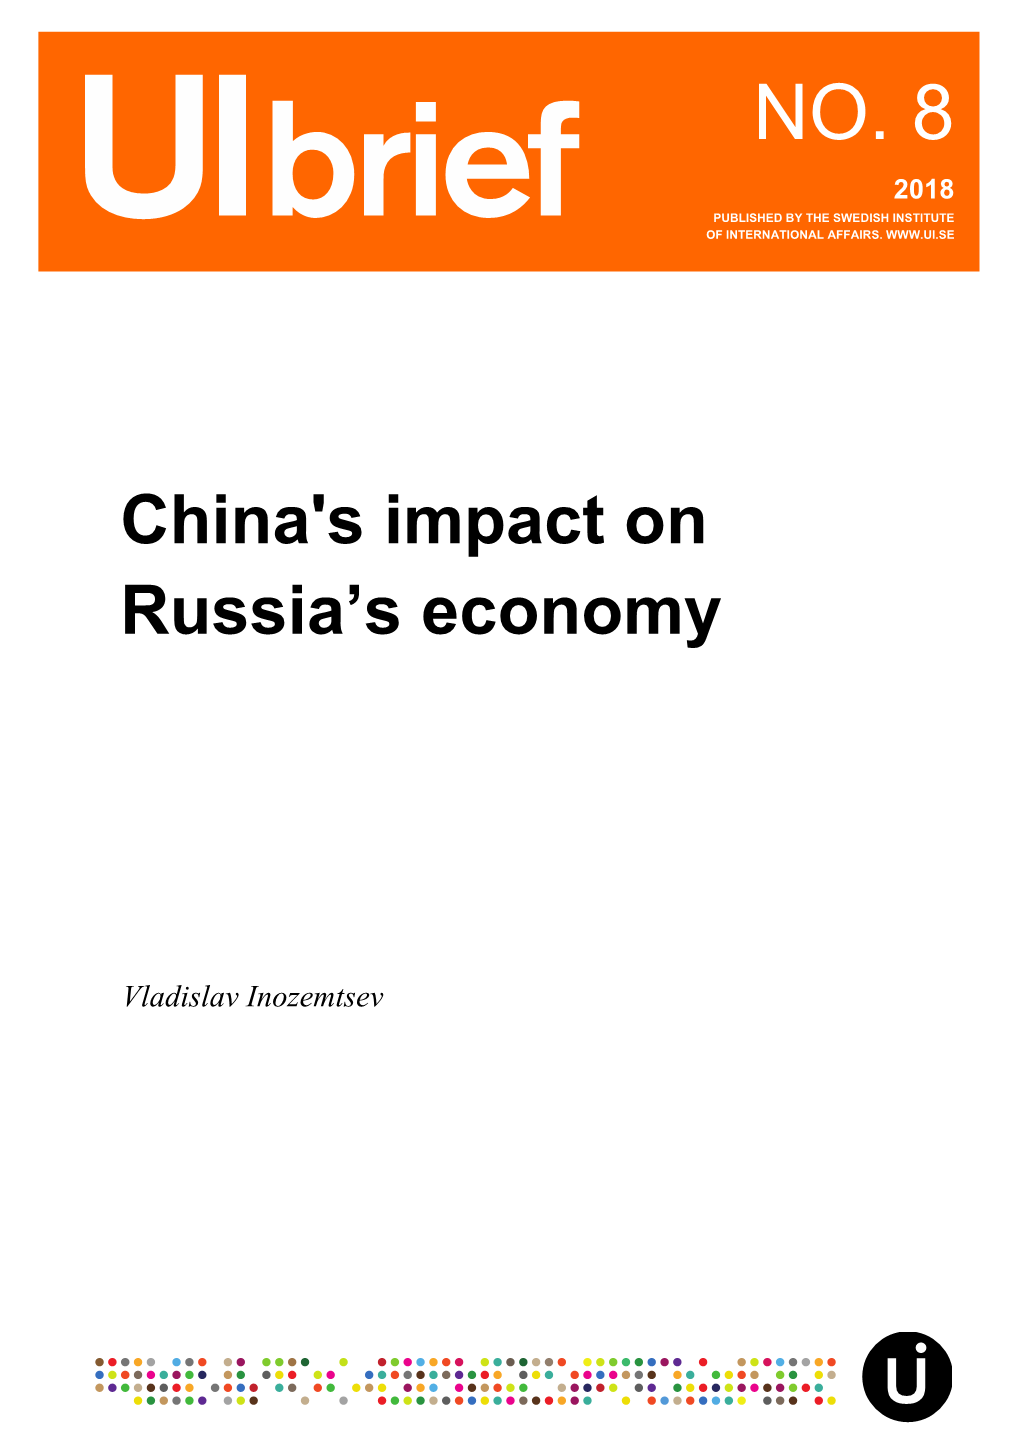 Сhina's Impact on Russia's Economy Inozemtsev, V. August 2018 UI Brief